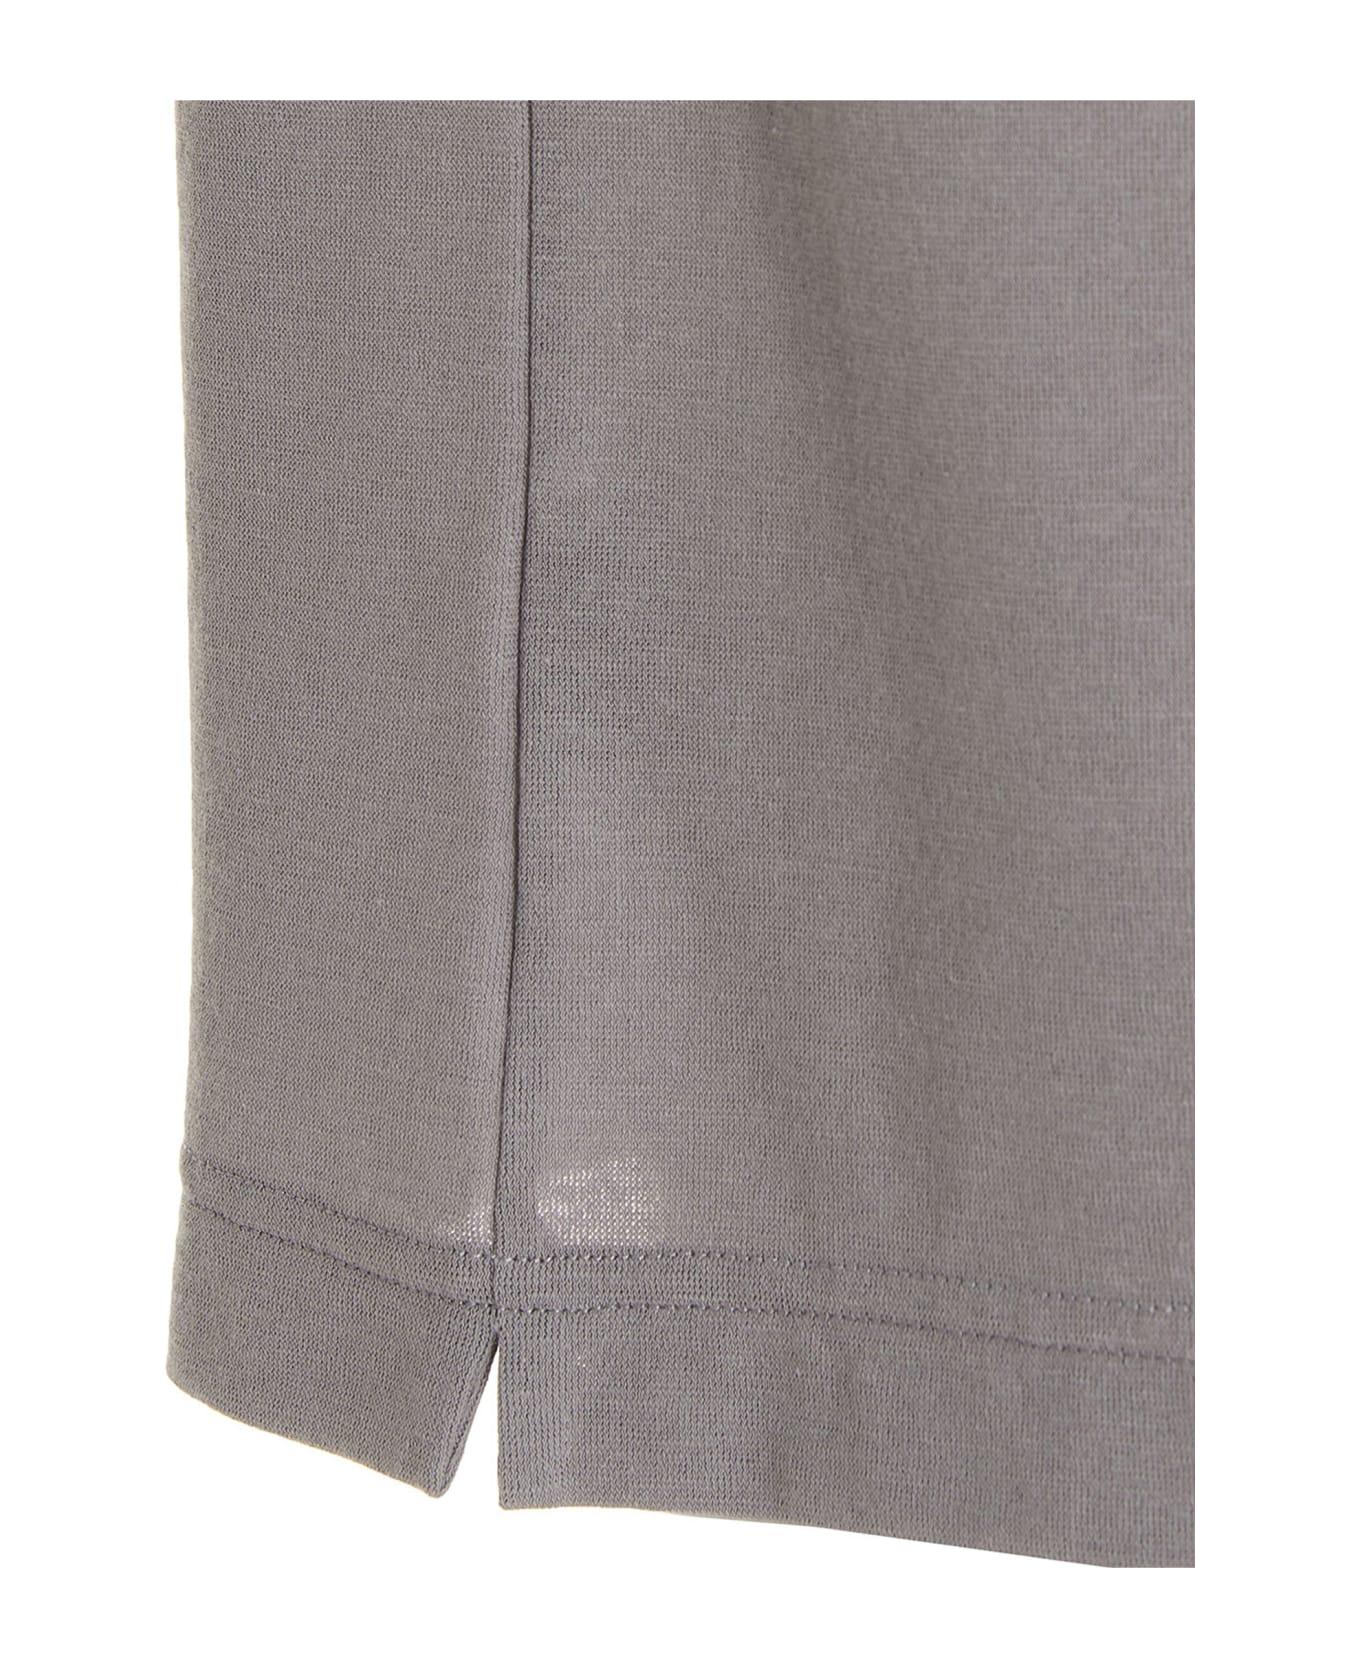 Zanone Ice Cotton Polo Shirt - Grey ポロシャツ